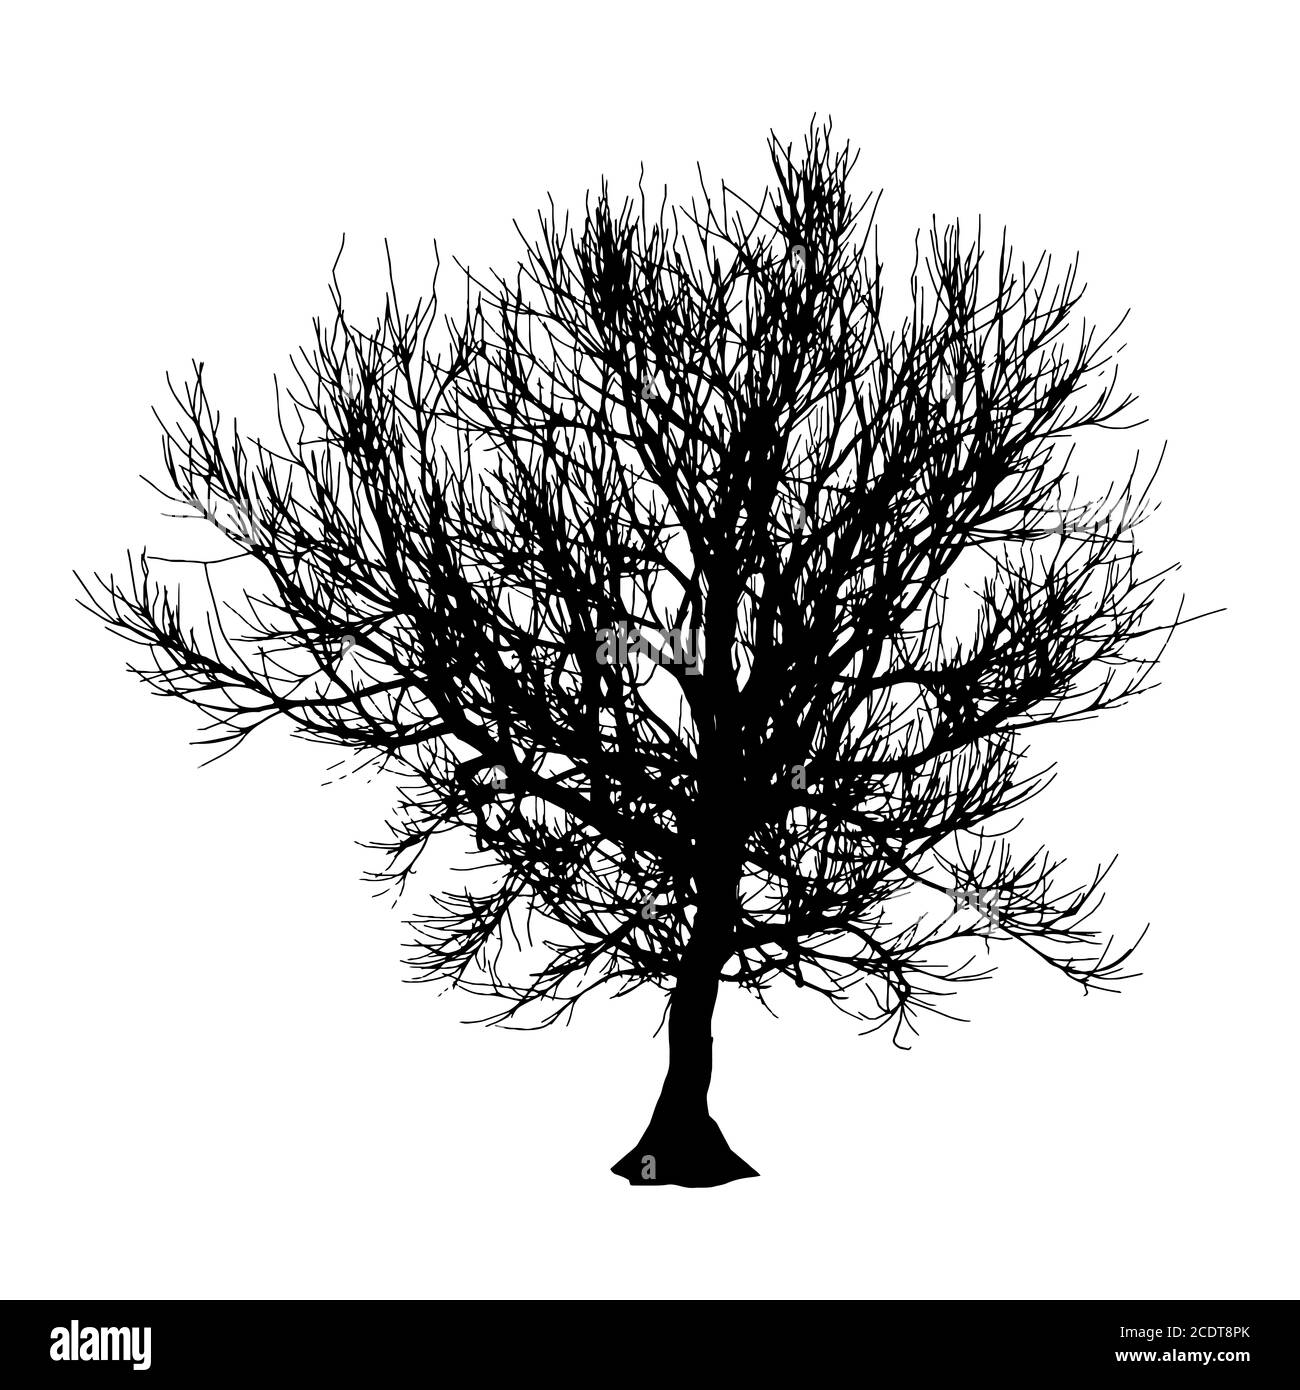 Black dry tree winter or autumn silhouette on white background.  illustration Stock Photo